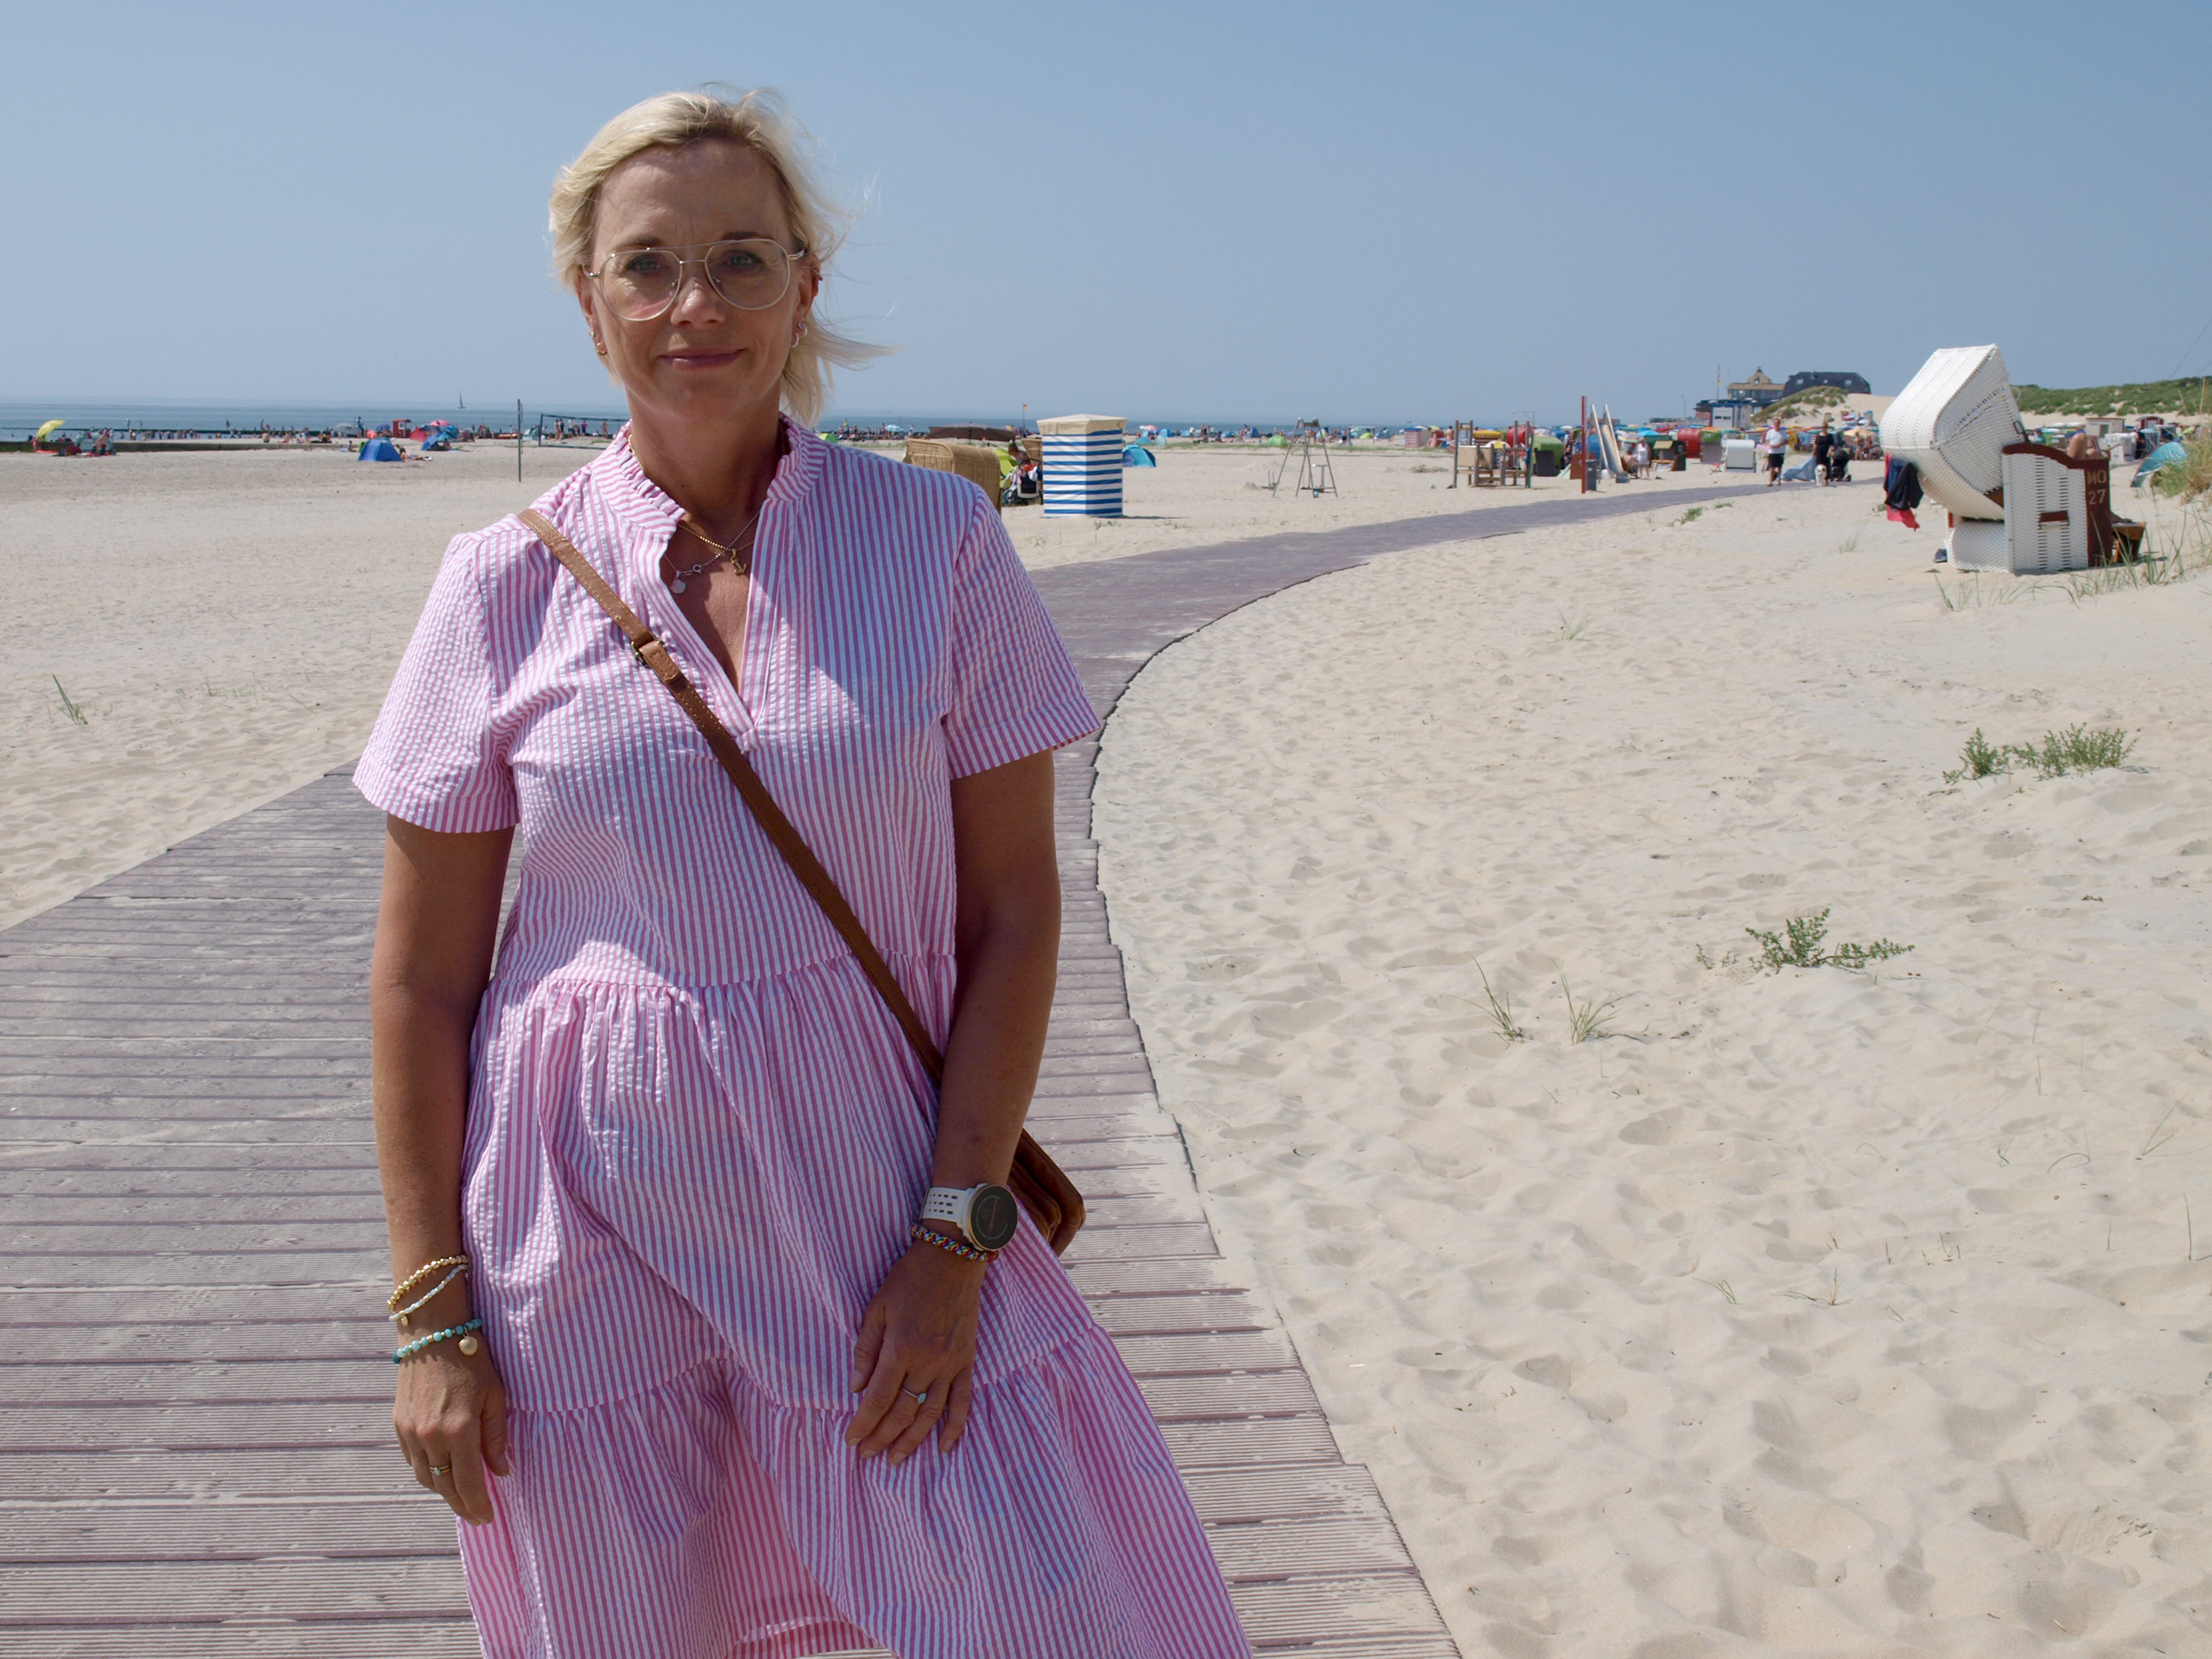 Frau mit rot-weißem Kleid steht am Strand